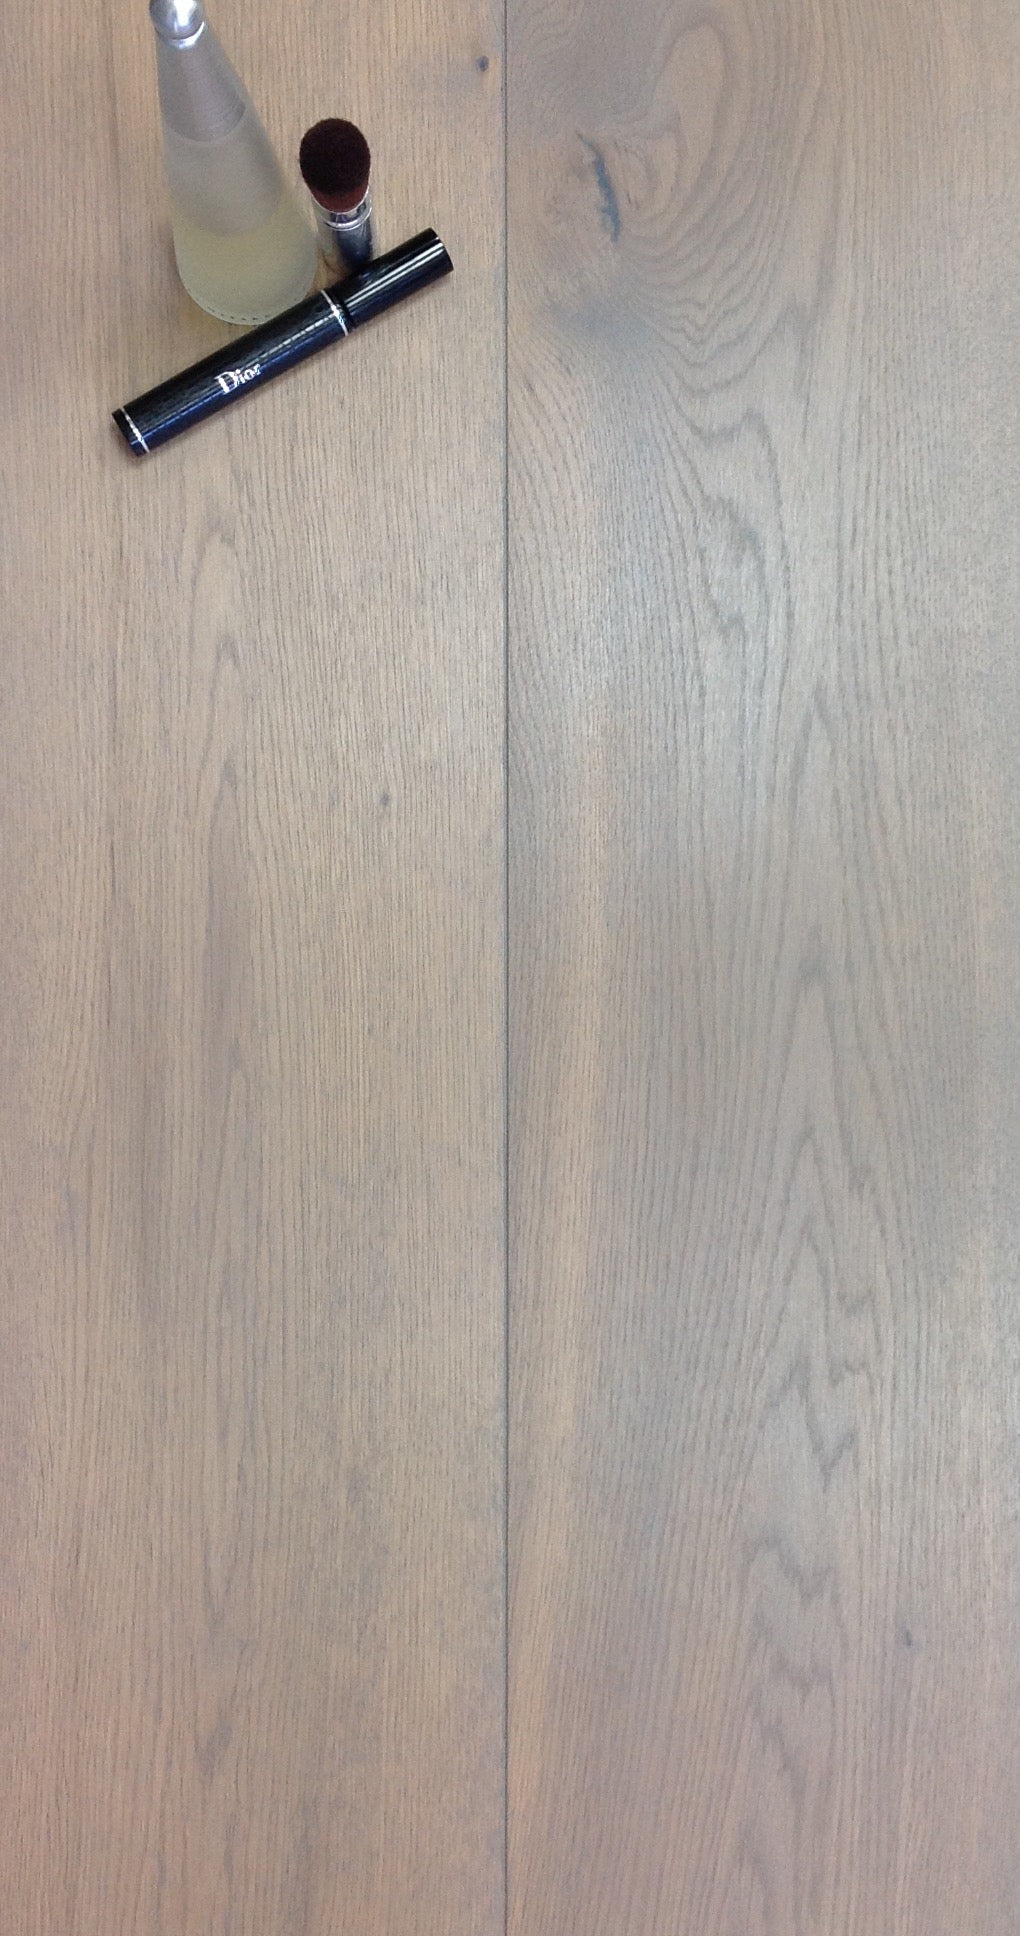 Metallic Grey engineered wood flooring “St James Collection”